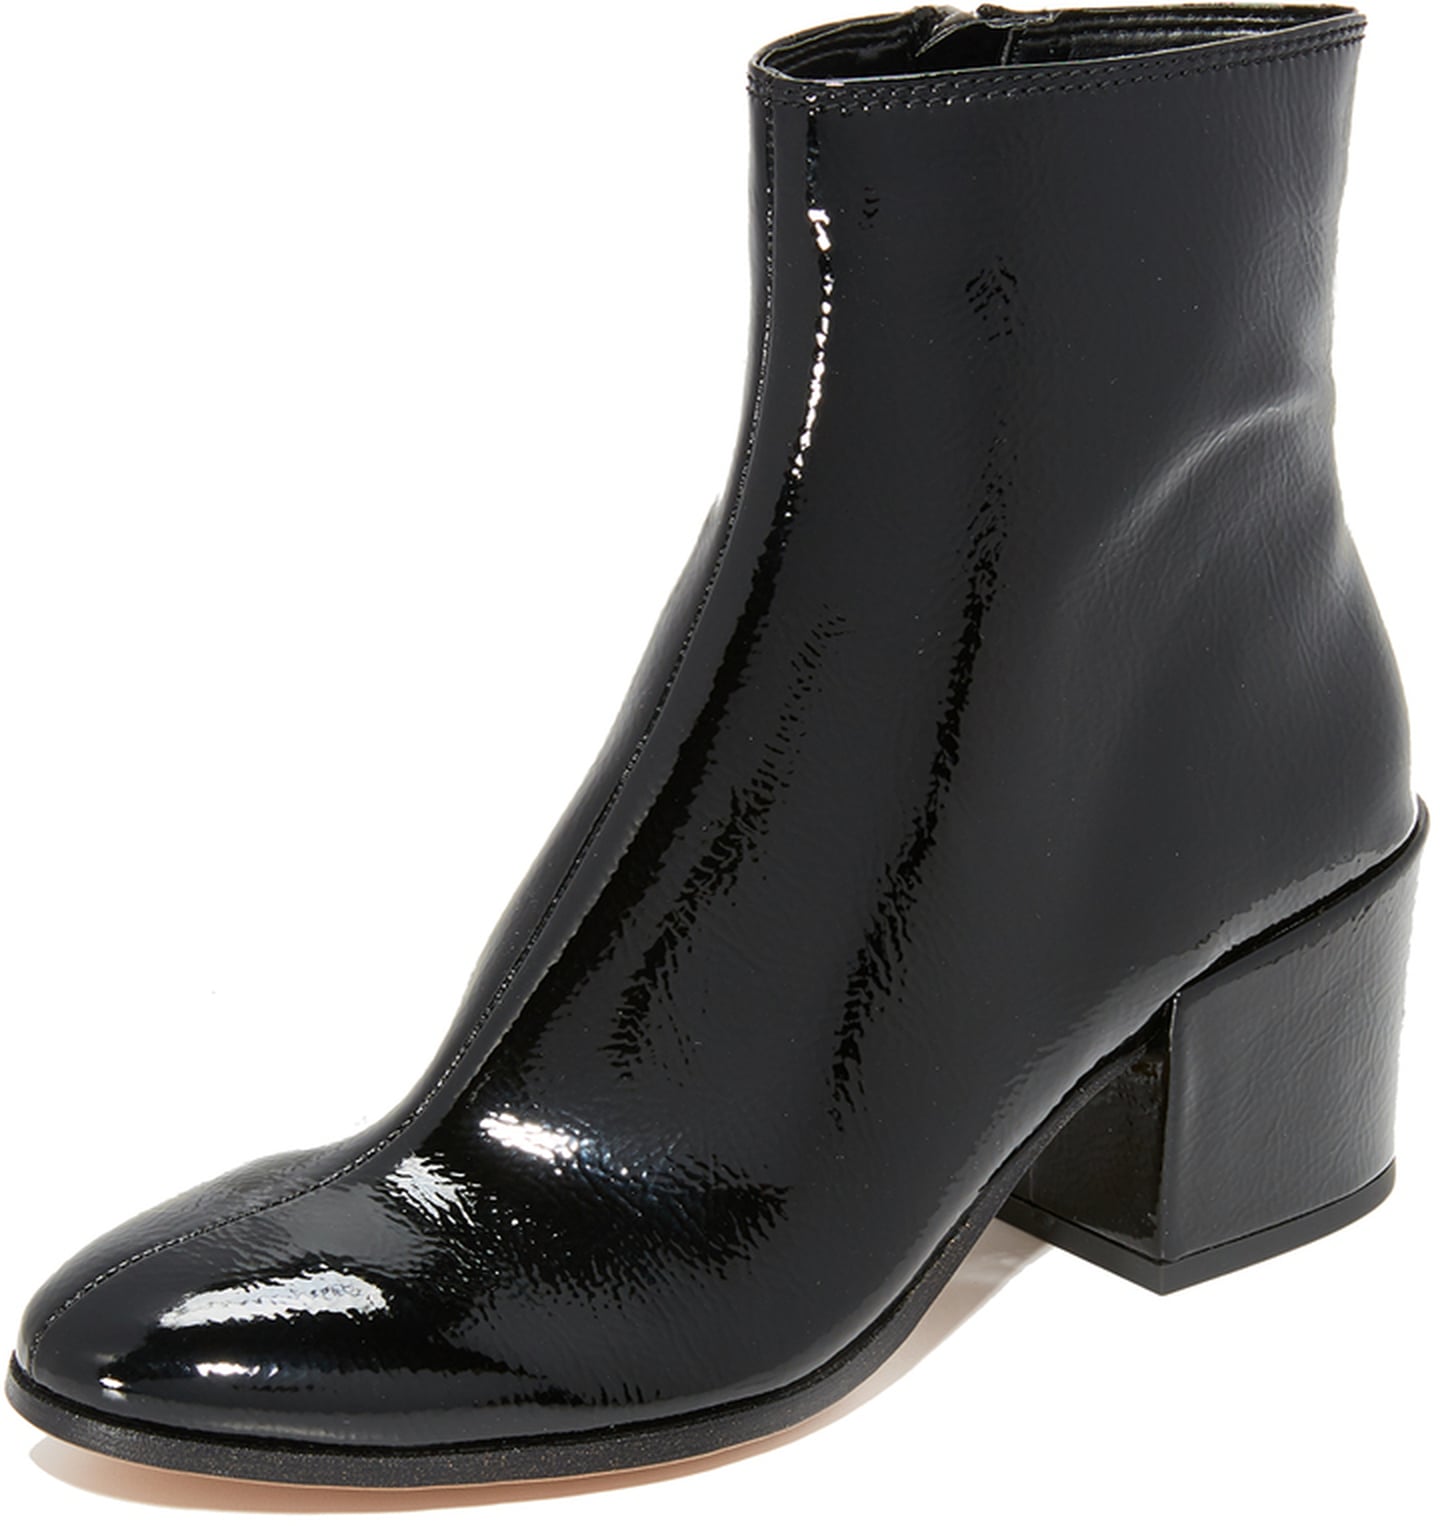 Selena Gomez Wearing Patent-Leather Louis Vuitton Boots | POPSUGAR Fashion